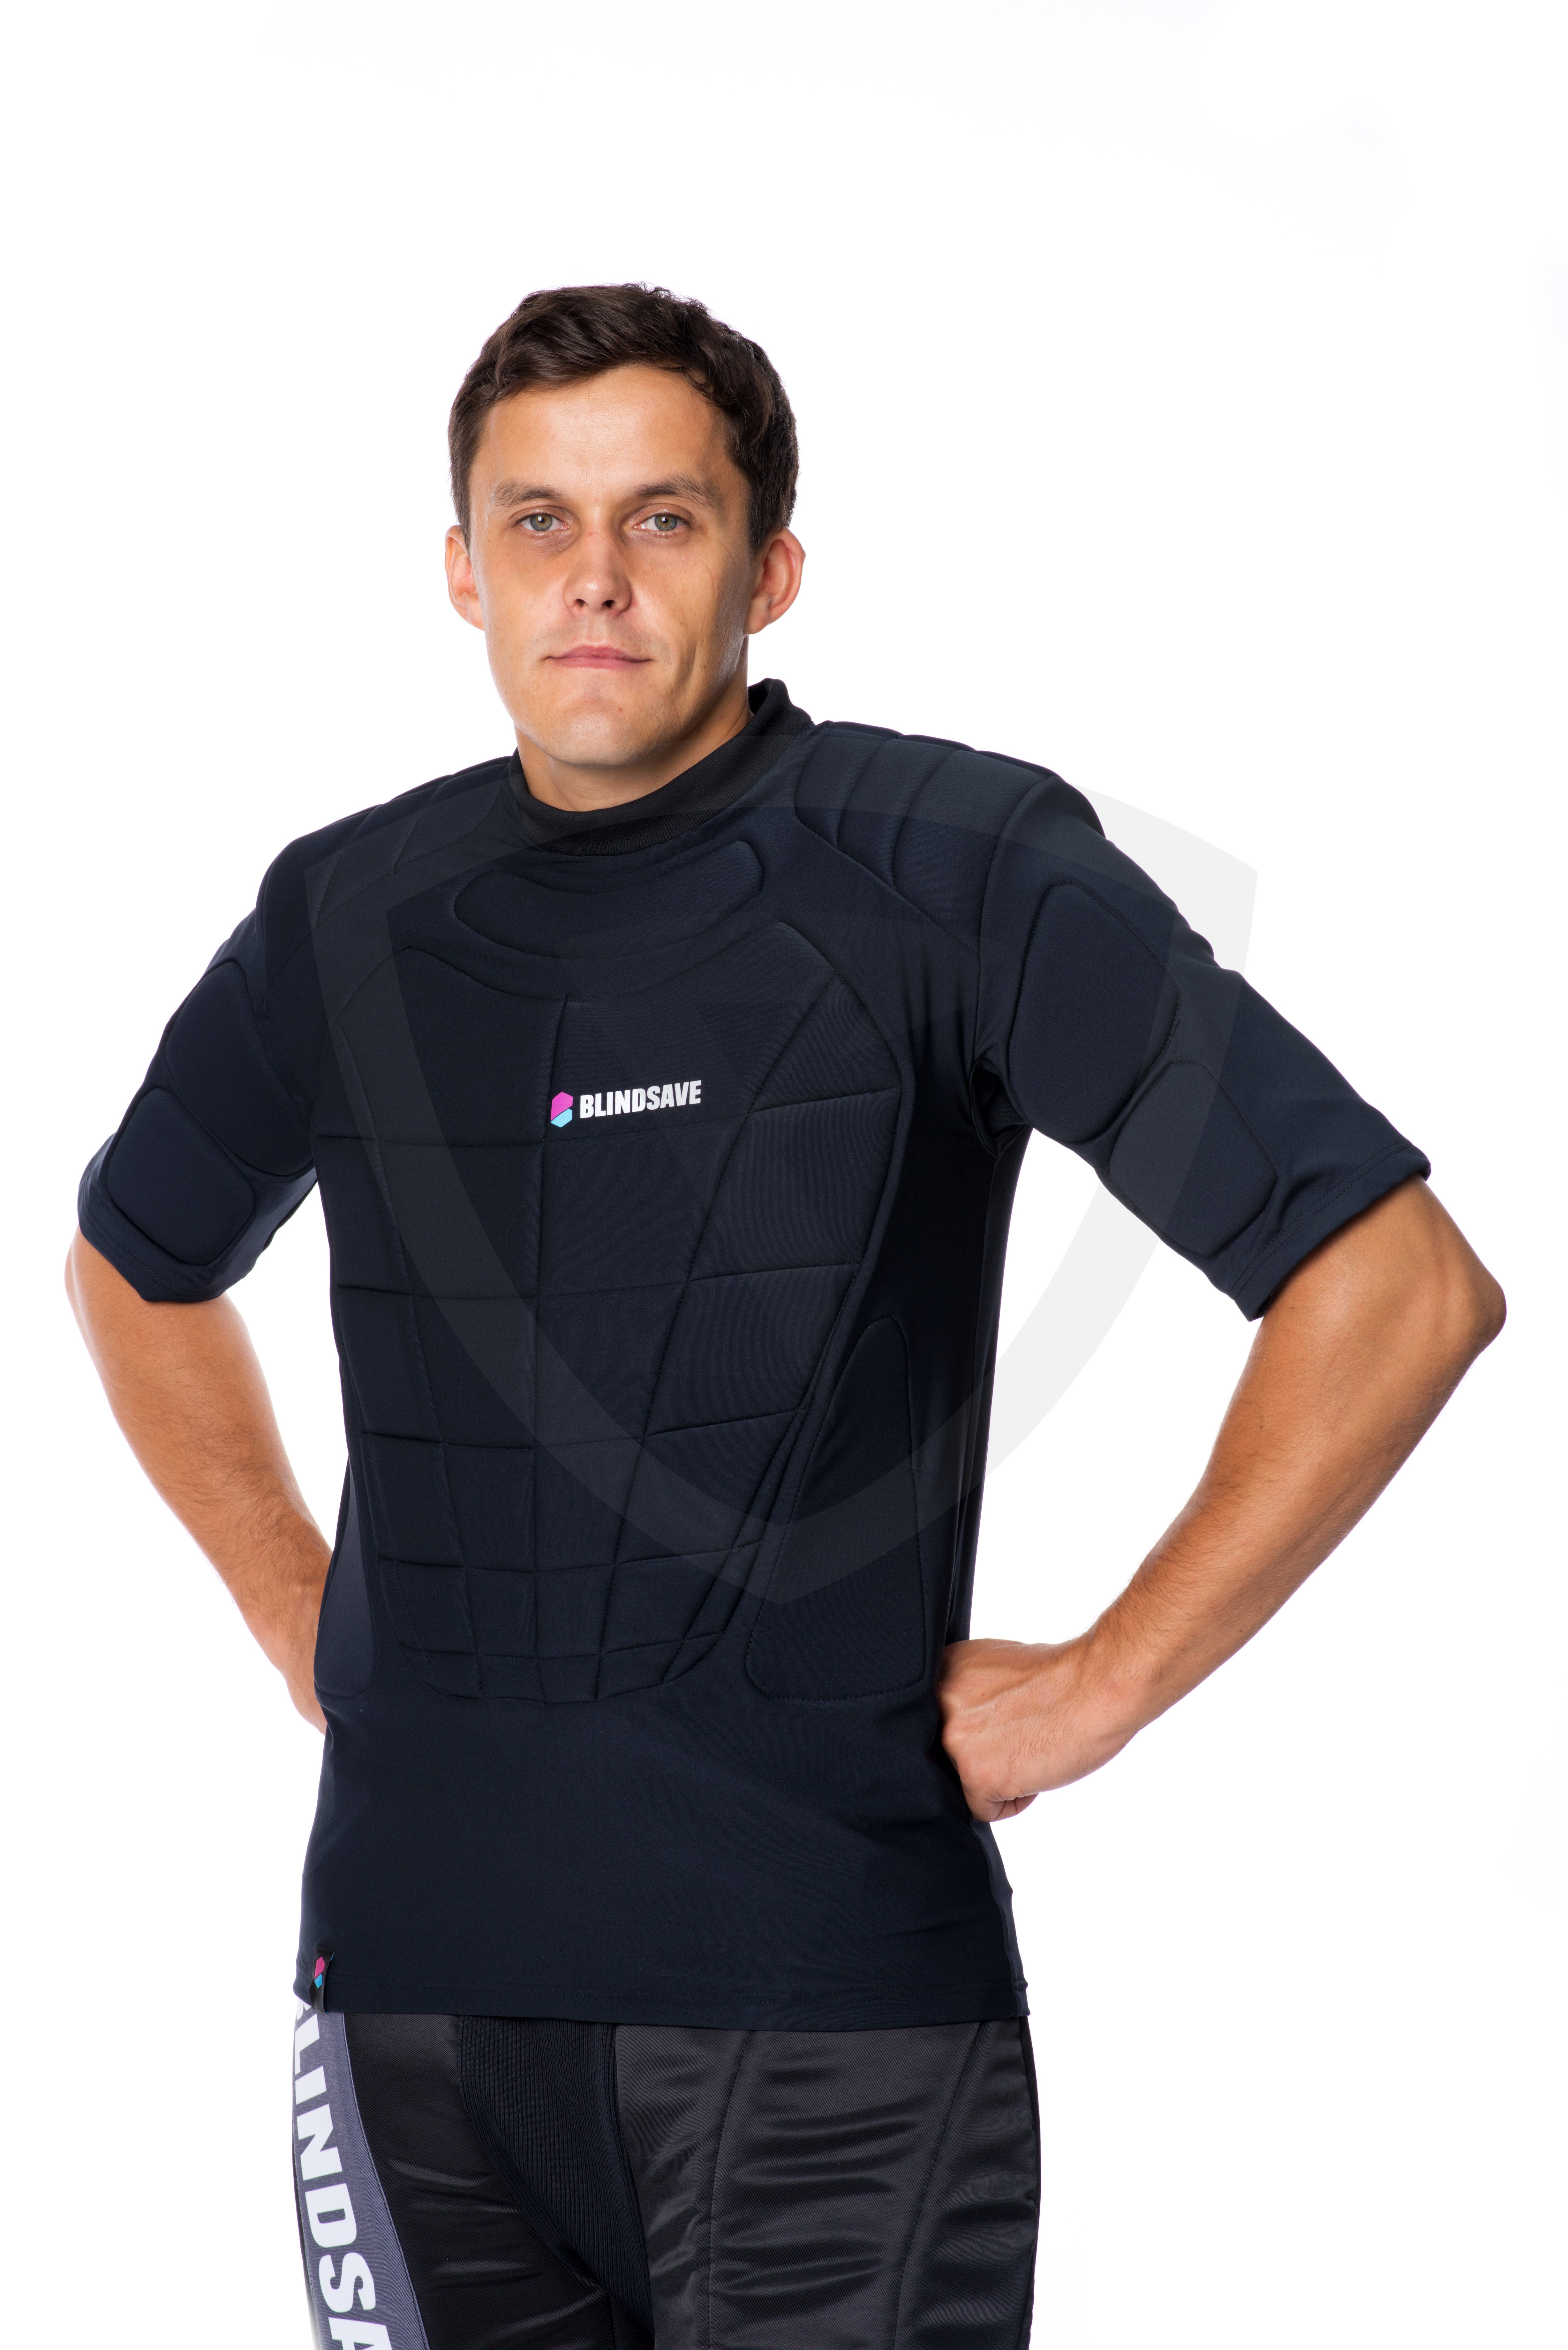 Blindsave Protection Vest SS Soft XL